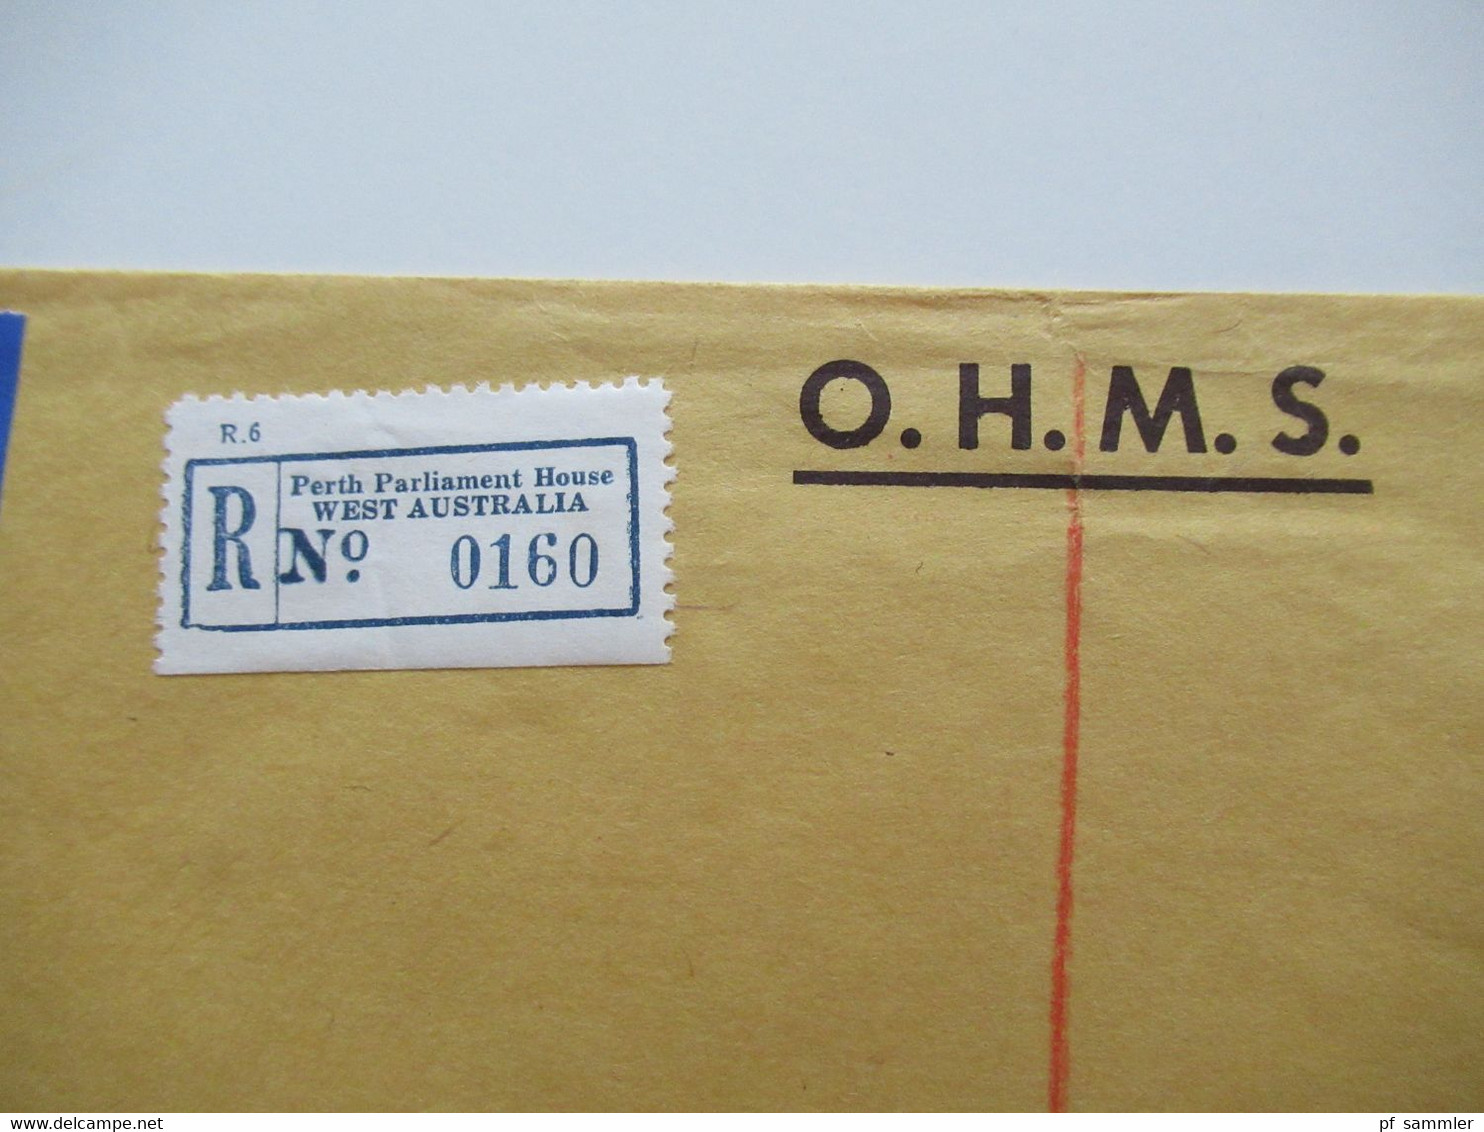 1980 Umschlag OHMS Und Stempel Legislative Council Parliament House Perth W.A Einschreiben Perth Parliament House - Storia Postale